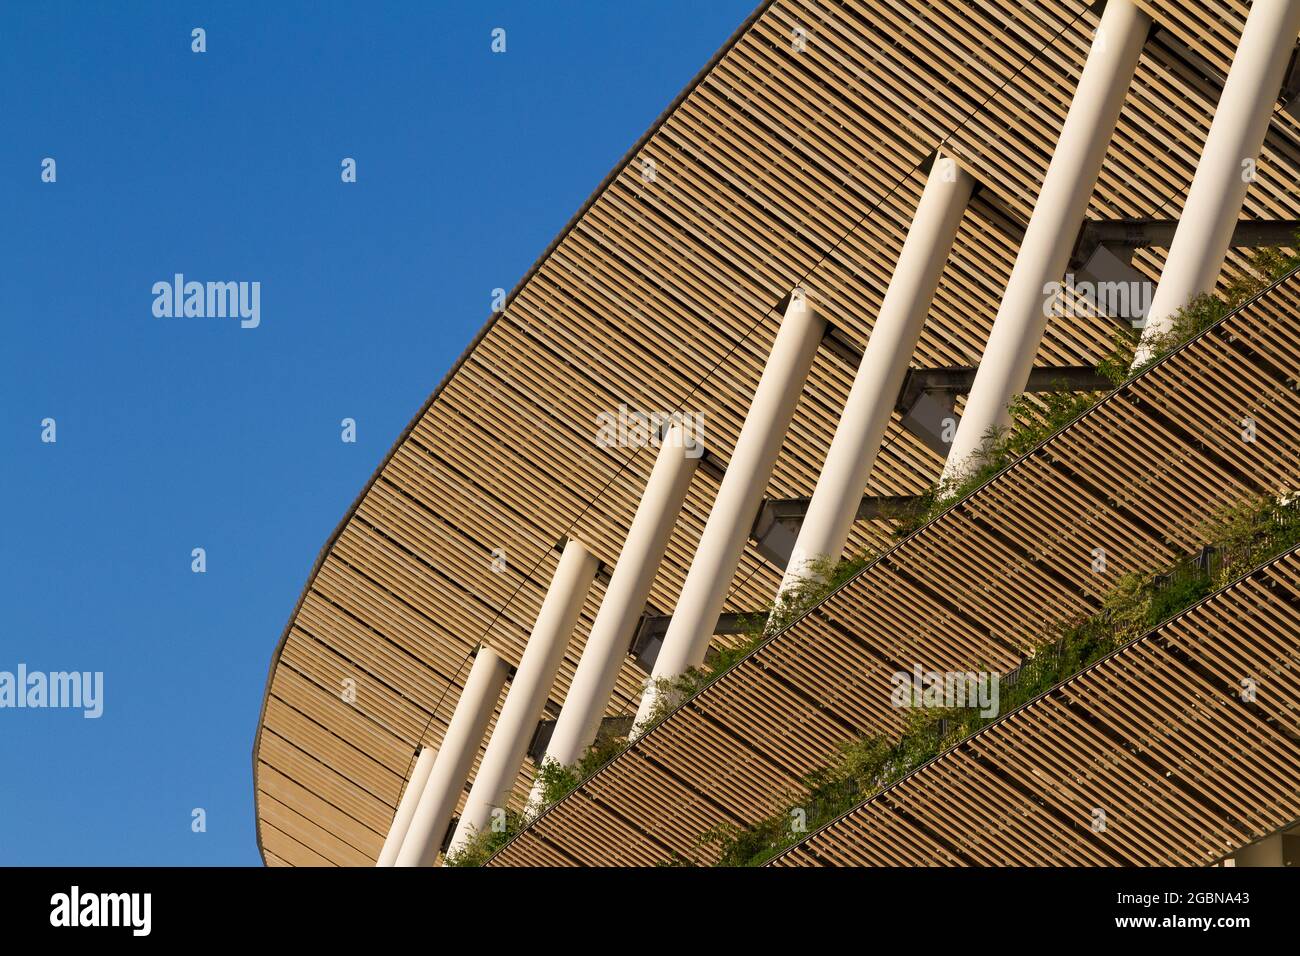 Detailbilder des Tokioter Olympiastadions in Gaiemmae, Tokio, Japan. Stockfoto